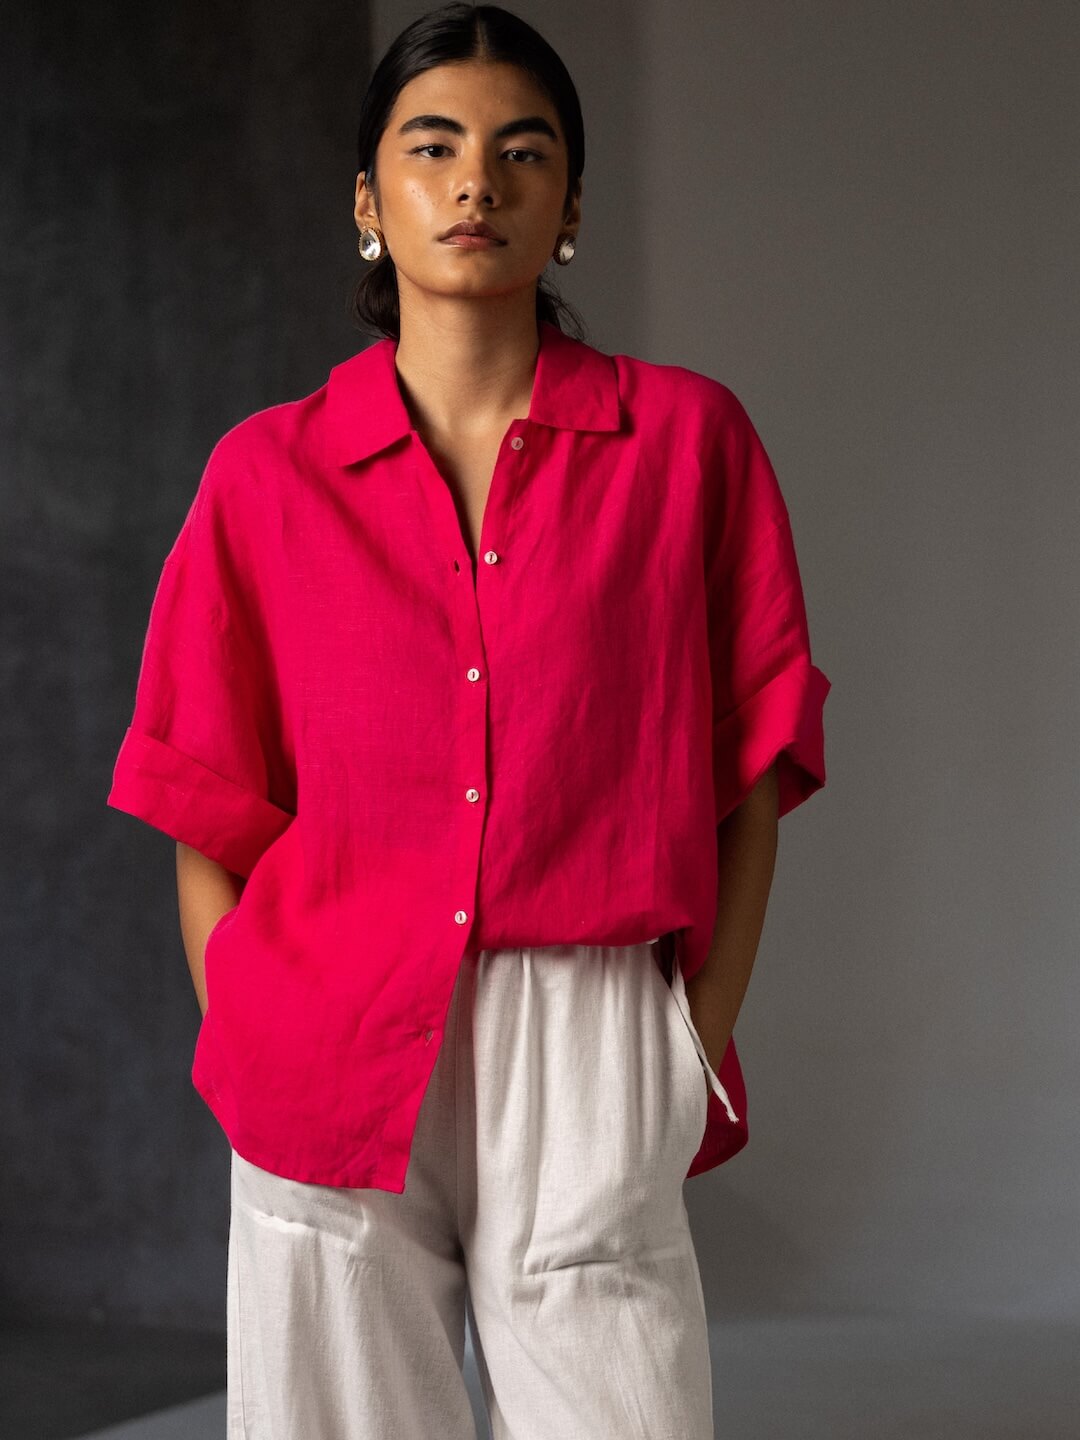 Women's Pink Linen Boxy Fit Blouse